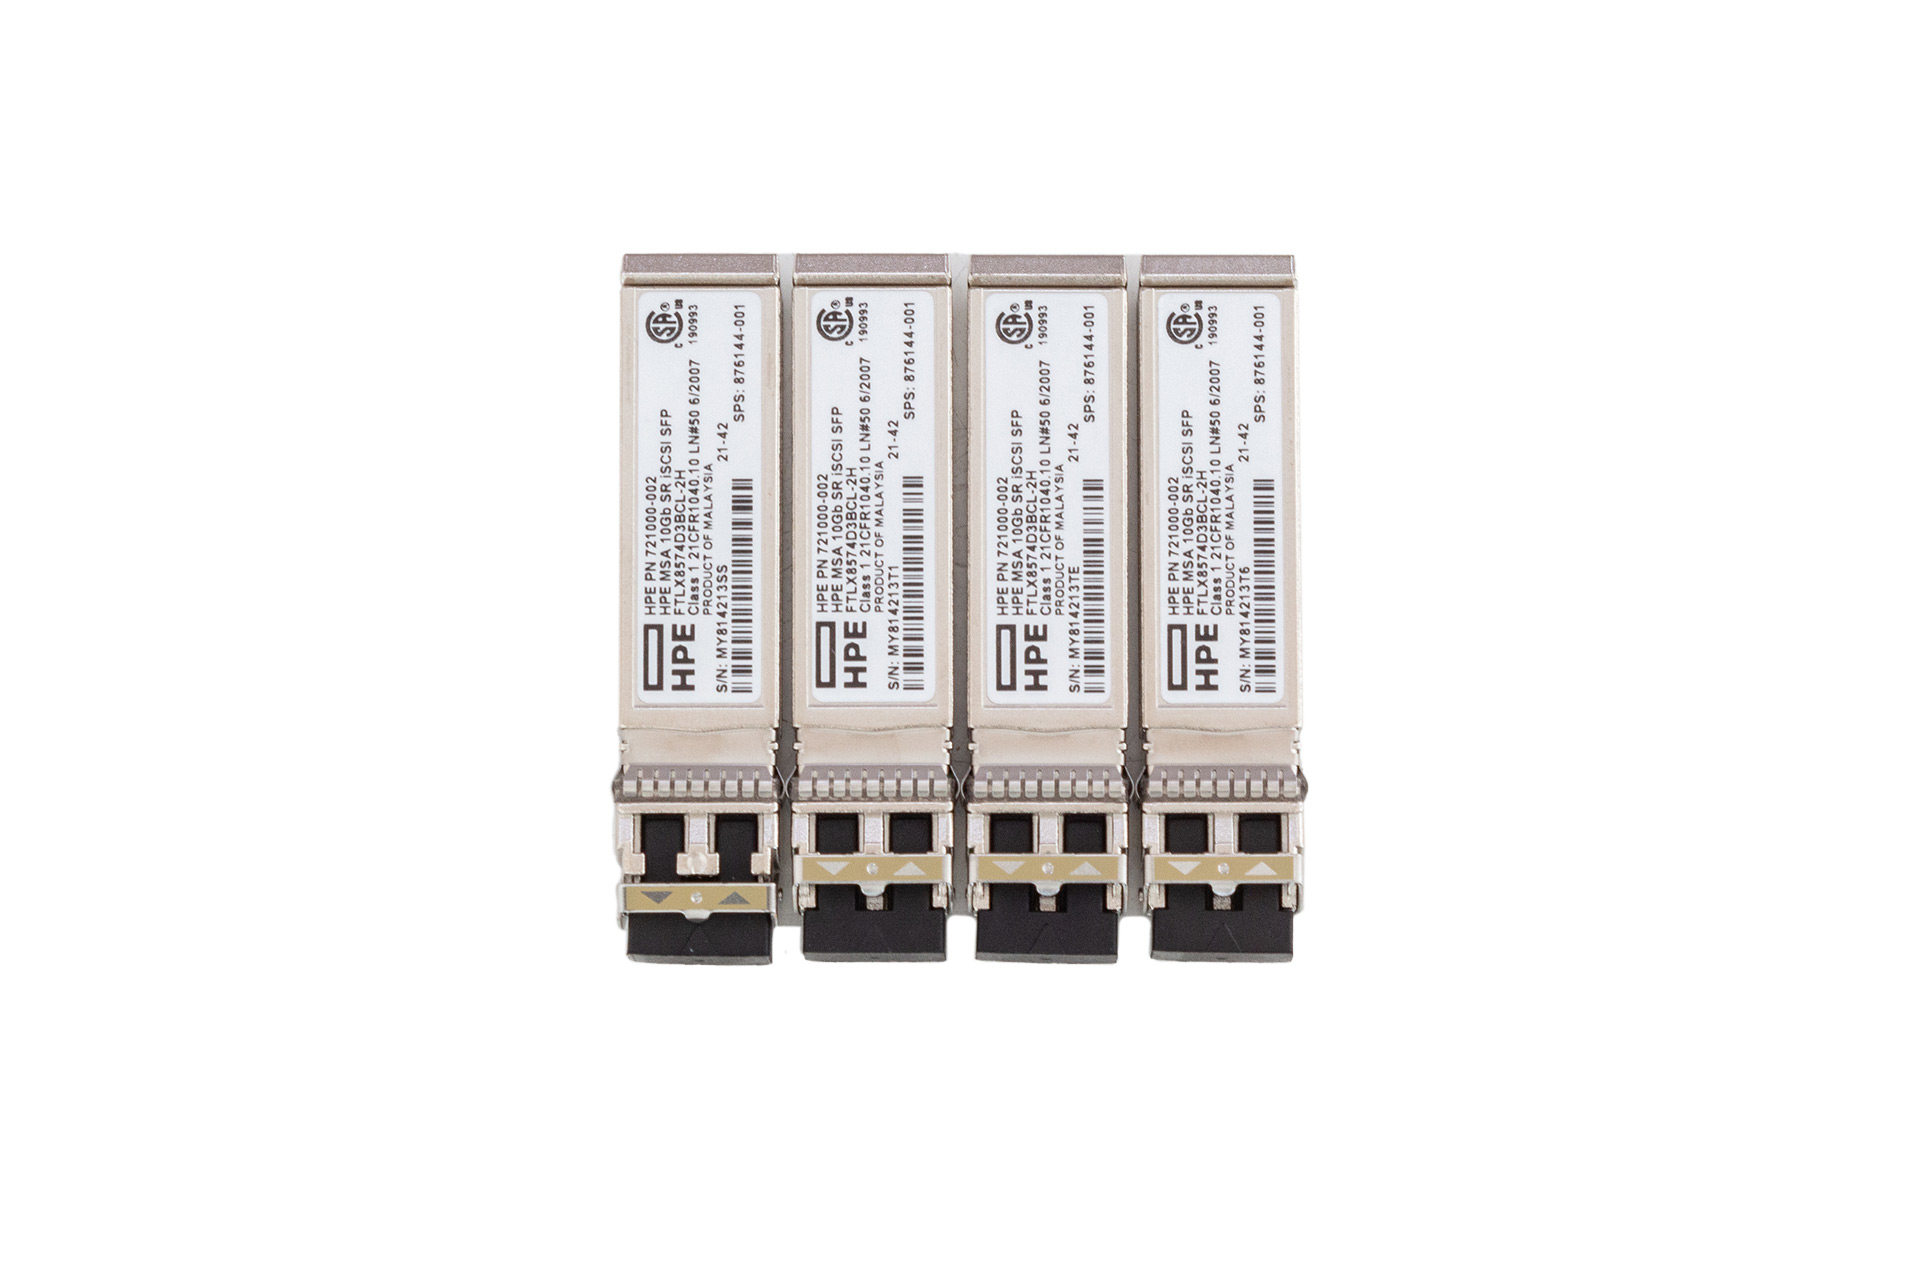 HPE GBIC 10GB Short Range iSCSI SFP+ 4-Pack, for MSA2040/2050/2060